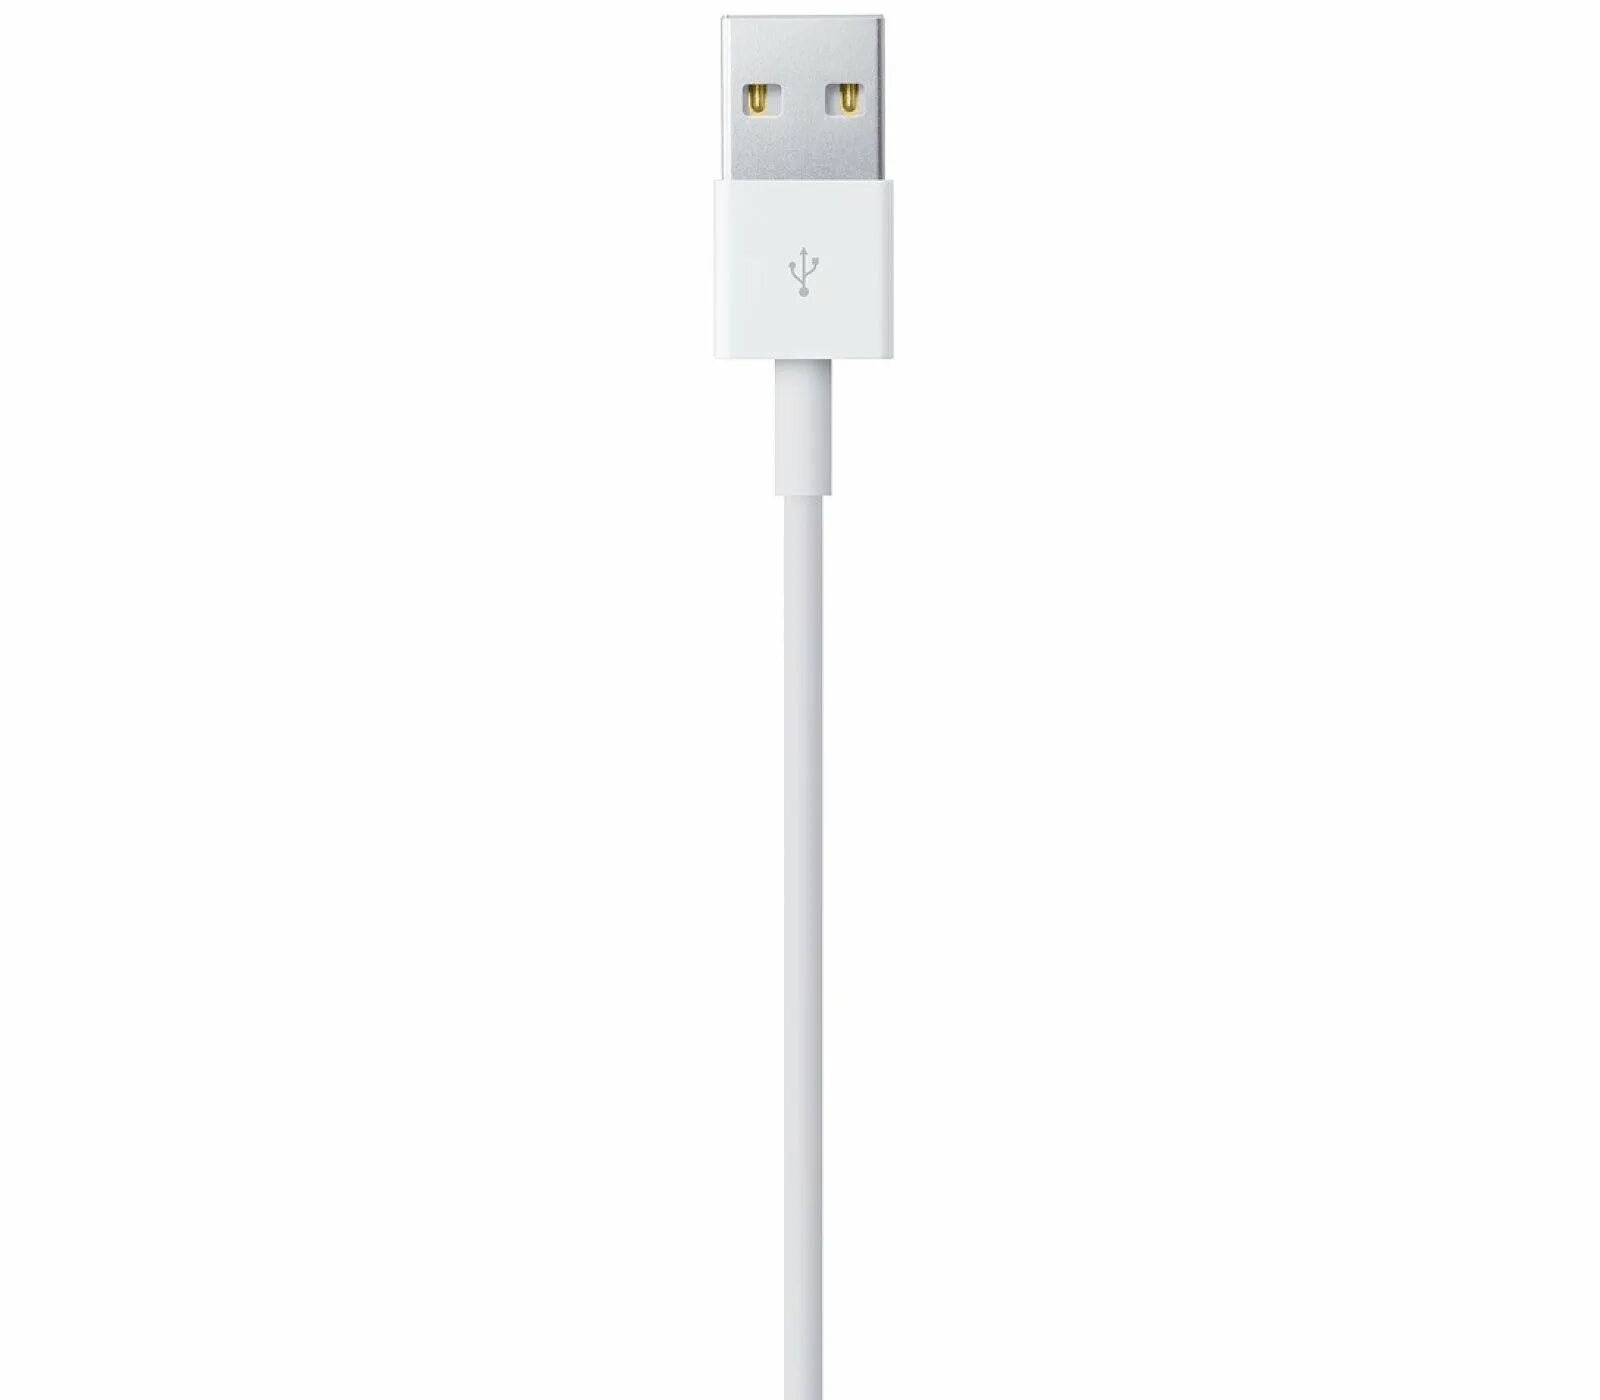 Usb apple iphone. Apple кабель USB-C/Lightning 2 м. Кабель Apple USB-Lightning, 2м, белый (md819zm/a). Кабель Apple Lightning to USB (1м) md818zm/a. Кабель Apple mxly2zm/a.